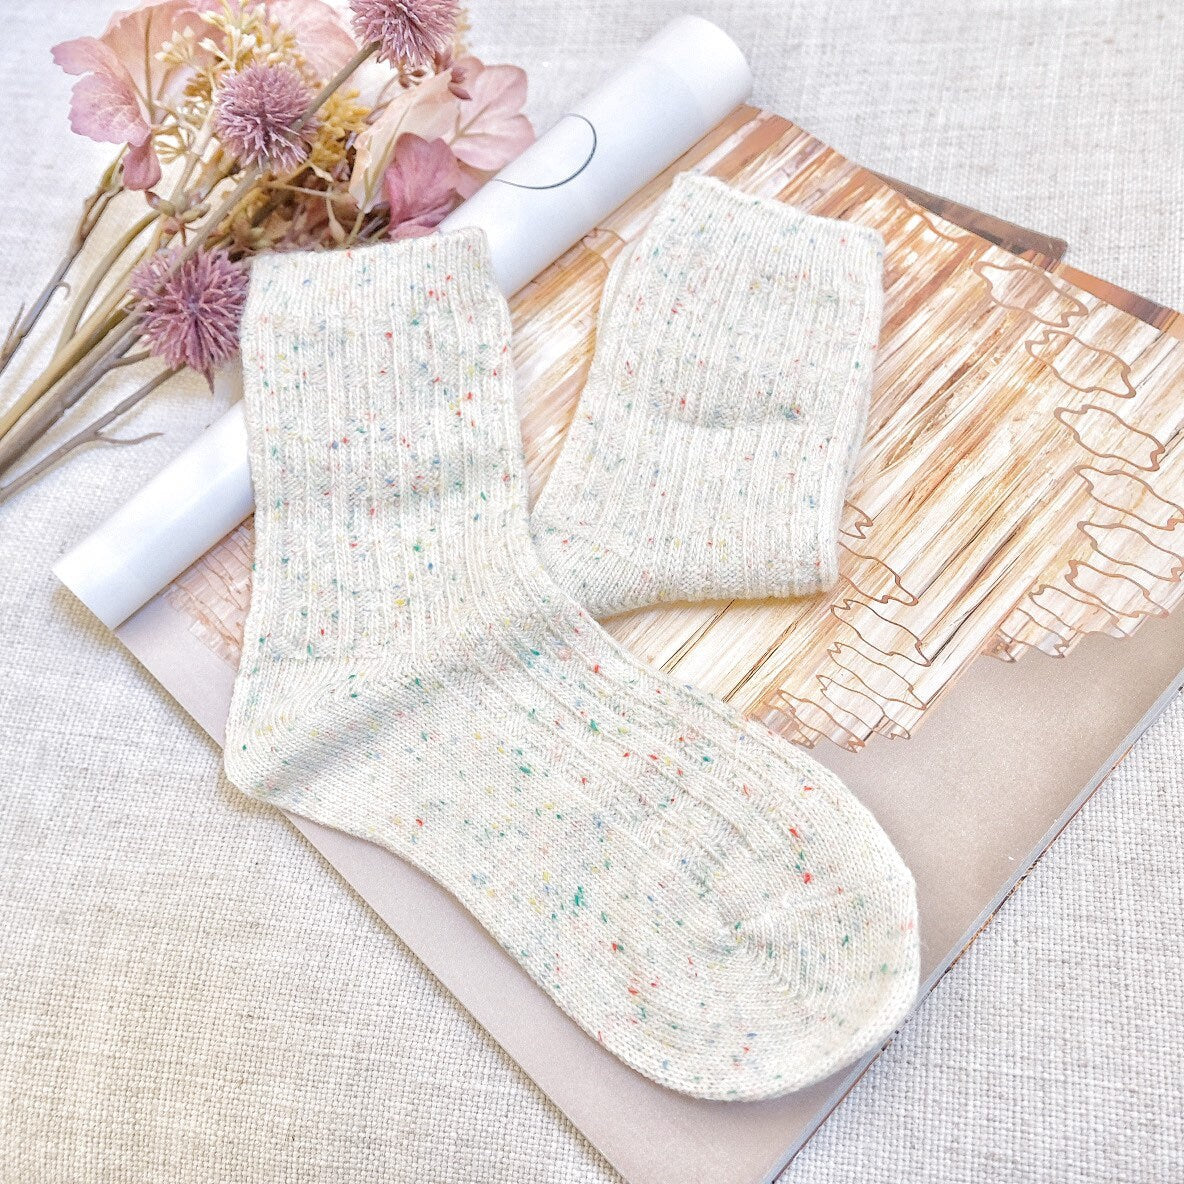 Miss June’s| 1 Pair Wool Angora blended socks|winter| Warm | Soft | High quality| Gift idea | Thanksgiving |women’s socks|Cozy